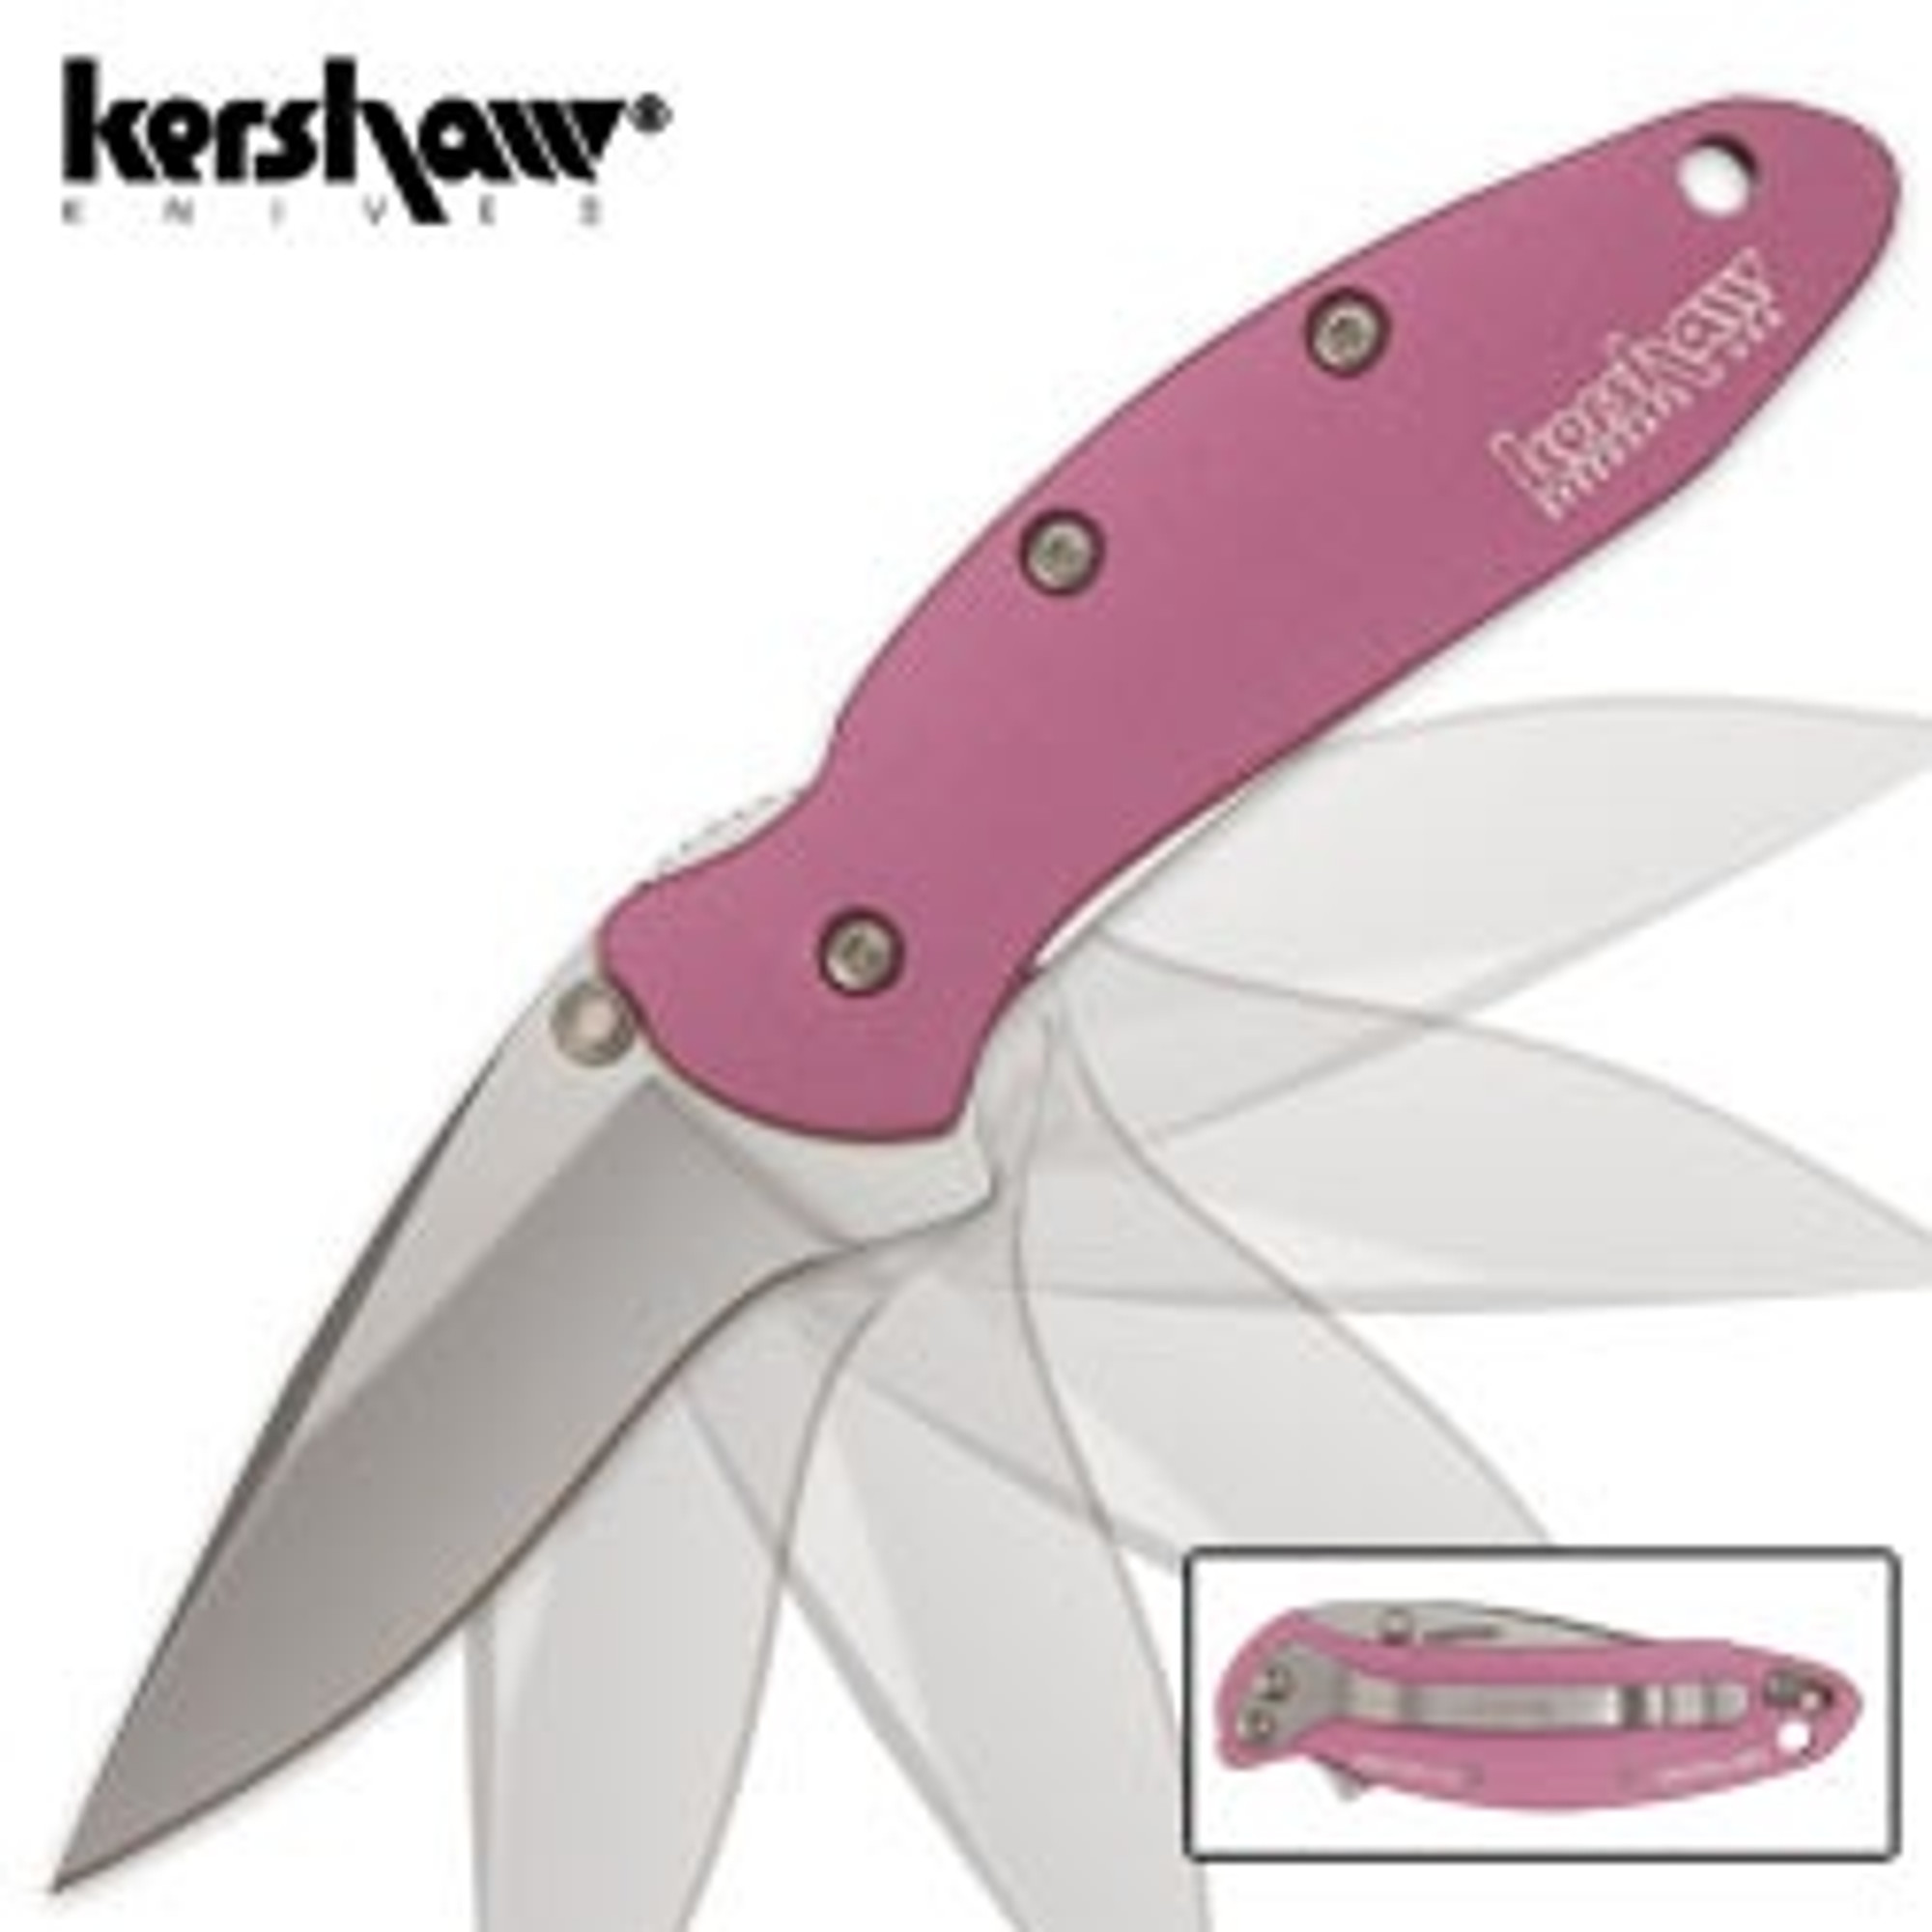 Kershaw Chive Plain Folding Knife - Pink